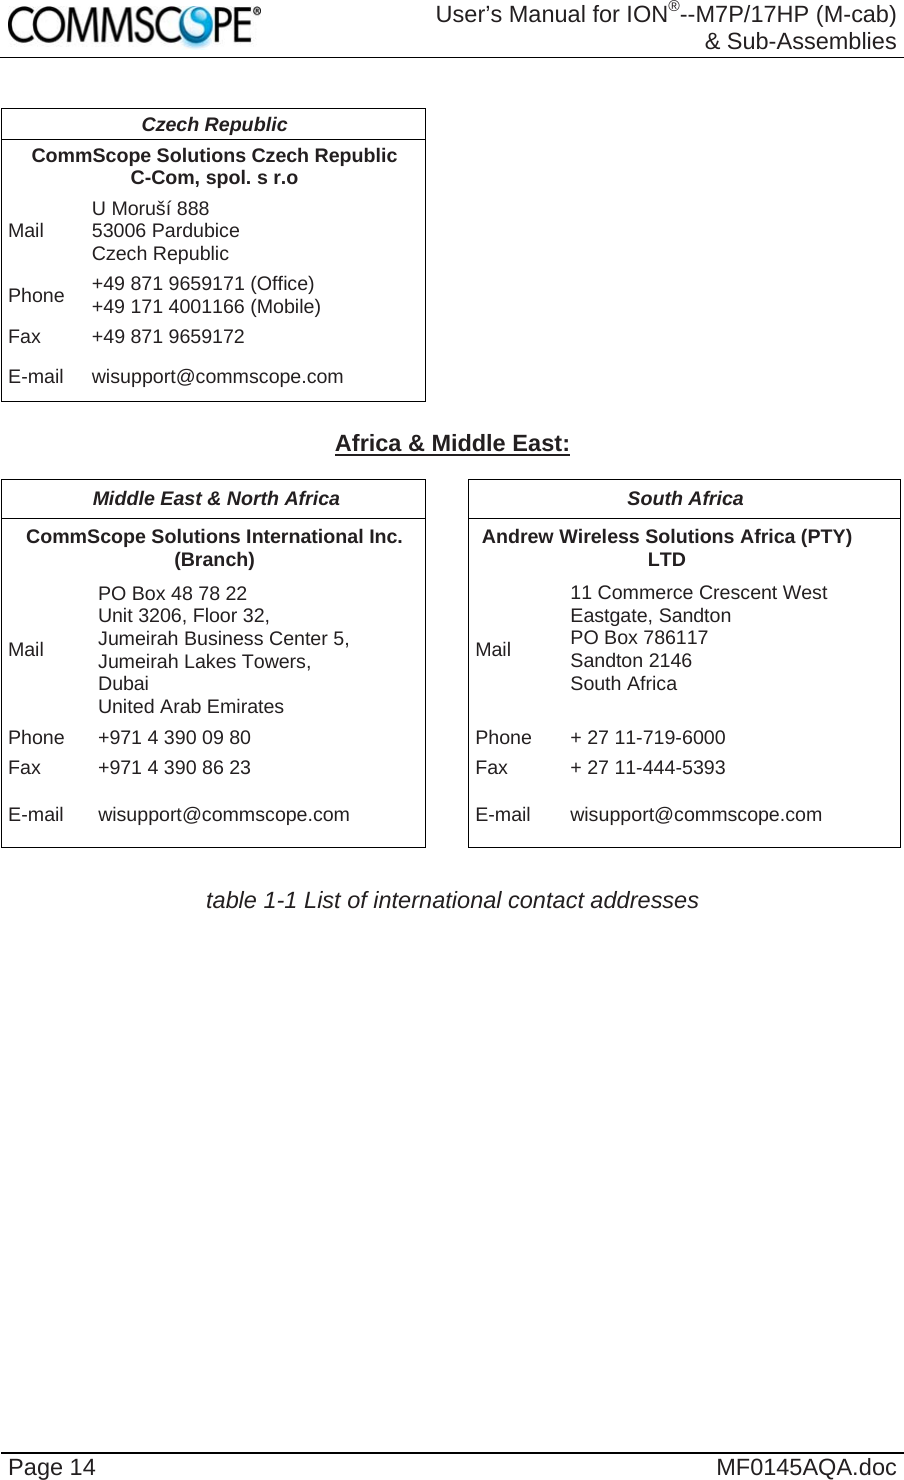  User’s Manual for ION®--M7P/17HP (M-cab) &amp; Sub-Assemblies Page 14  MF0145AQA.doc  Czech Republic   CommScope Solutions Czech RepublicC-Com, spol. s r.o   Mail  U Moruší 888 53006 Pardubice Czech Republic    Phone  +49 871 9659171 (Office) +49 171 4001166 (Mobile)   Fax +49 871 9659172     E-mail wisupport@commscope.com      Africa &amp; Middle East:  Middle East &amp; North Africa  South Africa CommScope Solutions International Inc. (Branch)  Andrew Wireless Solutions Africa (PTY) LTD Mail PO Box 48 78 22 Unit 3206, Floor 32, Jumeirah Business Center 5,  Jumeirah Lakes Towers, Dubai United Arab Emirates Mail 11 Commerce Crescent West Eastgate, Sandton  PO Box 786117 Sandton 2146 South Africa Phone  +971 4 390 09 80  Phone  + 27 11-719-6000 Fax  +971 4 390 86 23  Fax  + 27 11-444-5393  E-mail wisupport@commscope.com E-mail wisupport@commscope.com  table 1-1 List of international contact addresses  